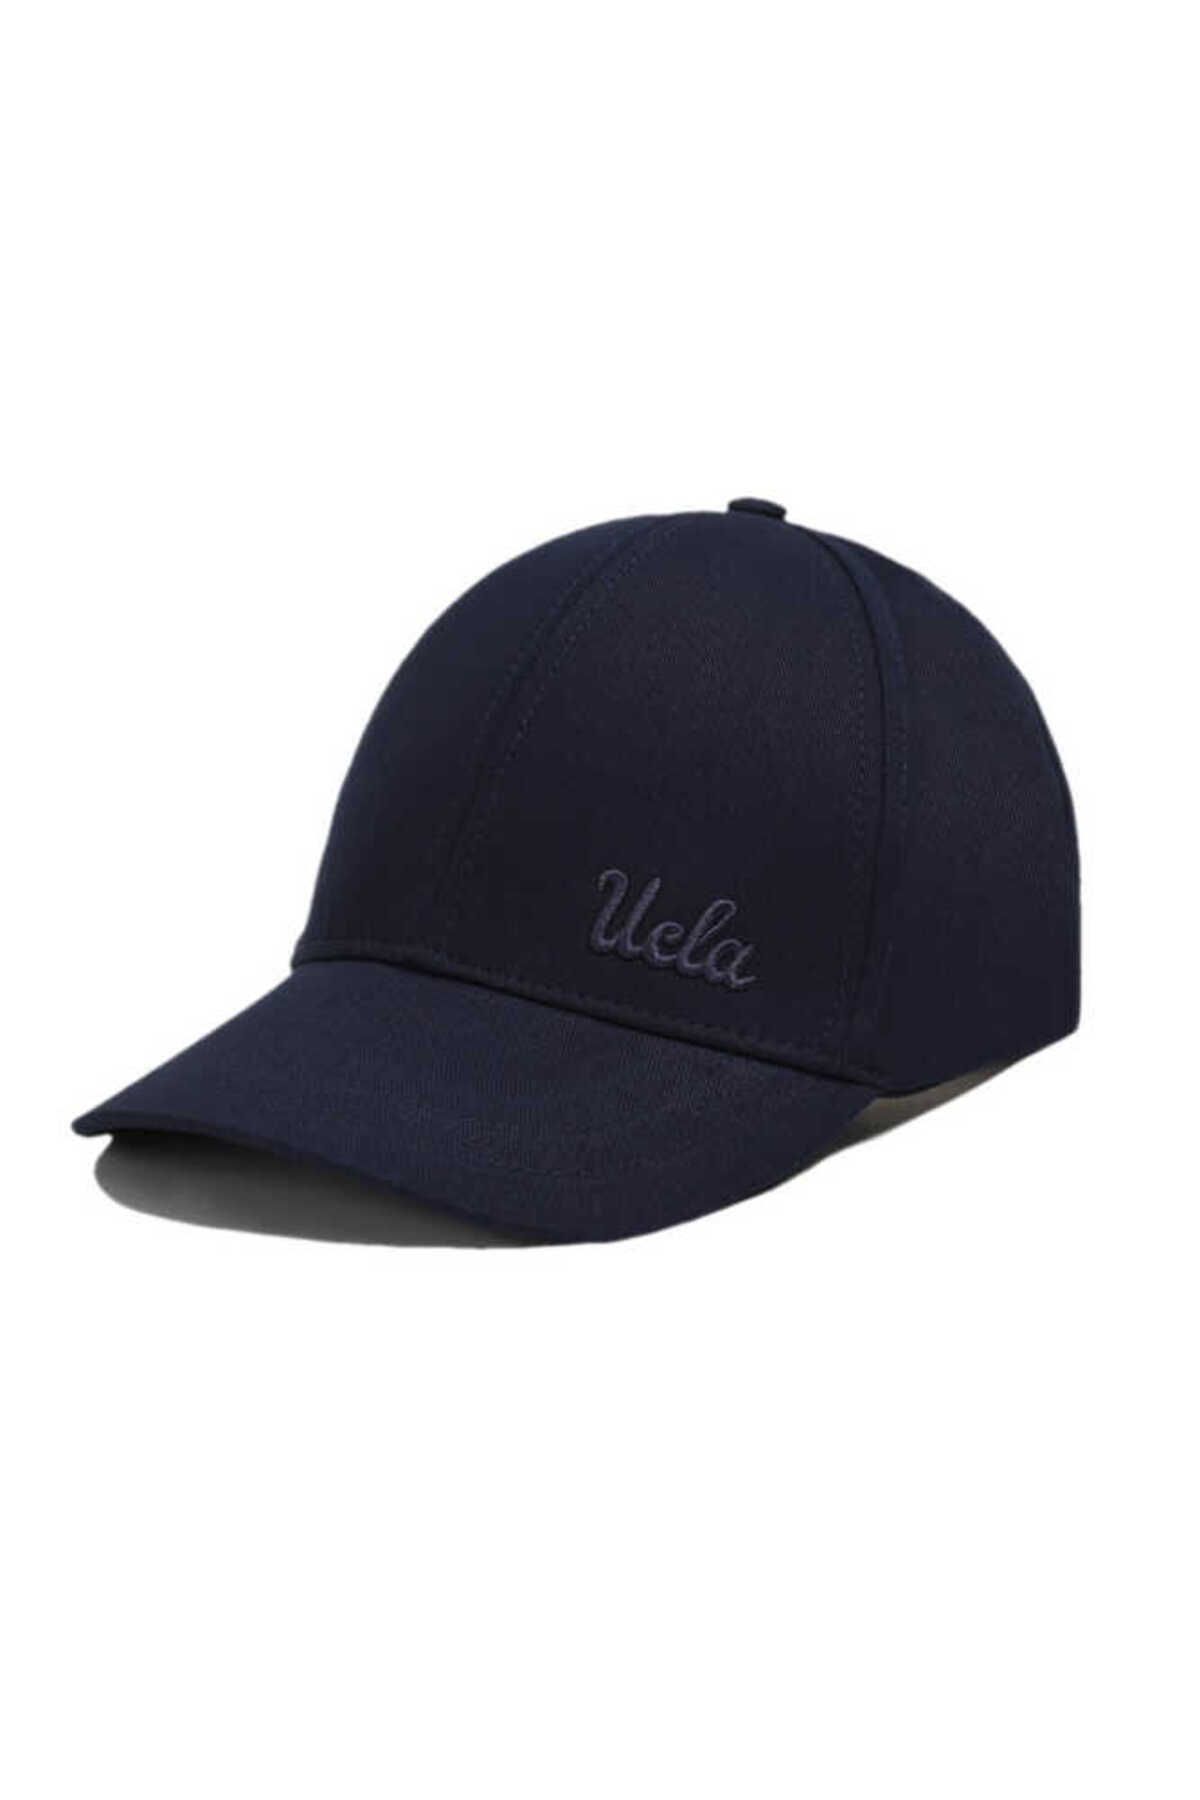 Ucla NEO Lacivert Baseball Cap Nakışlı Unisex Şapka